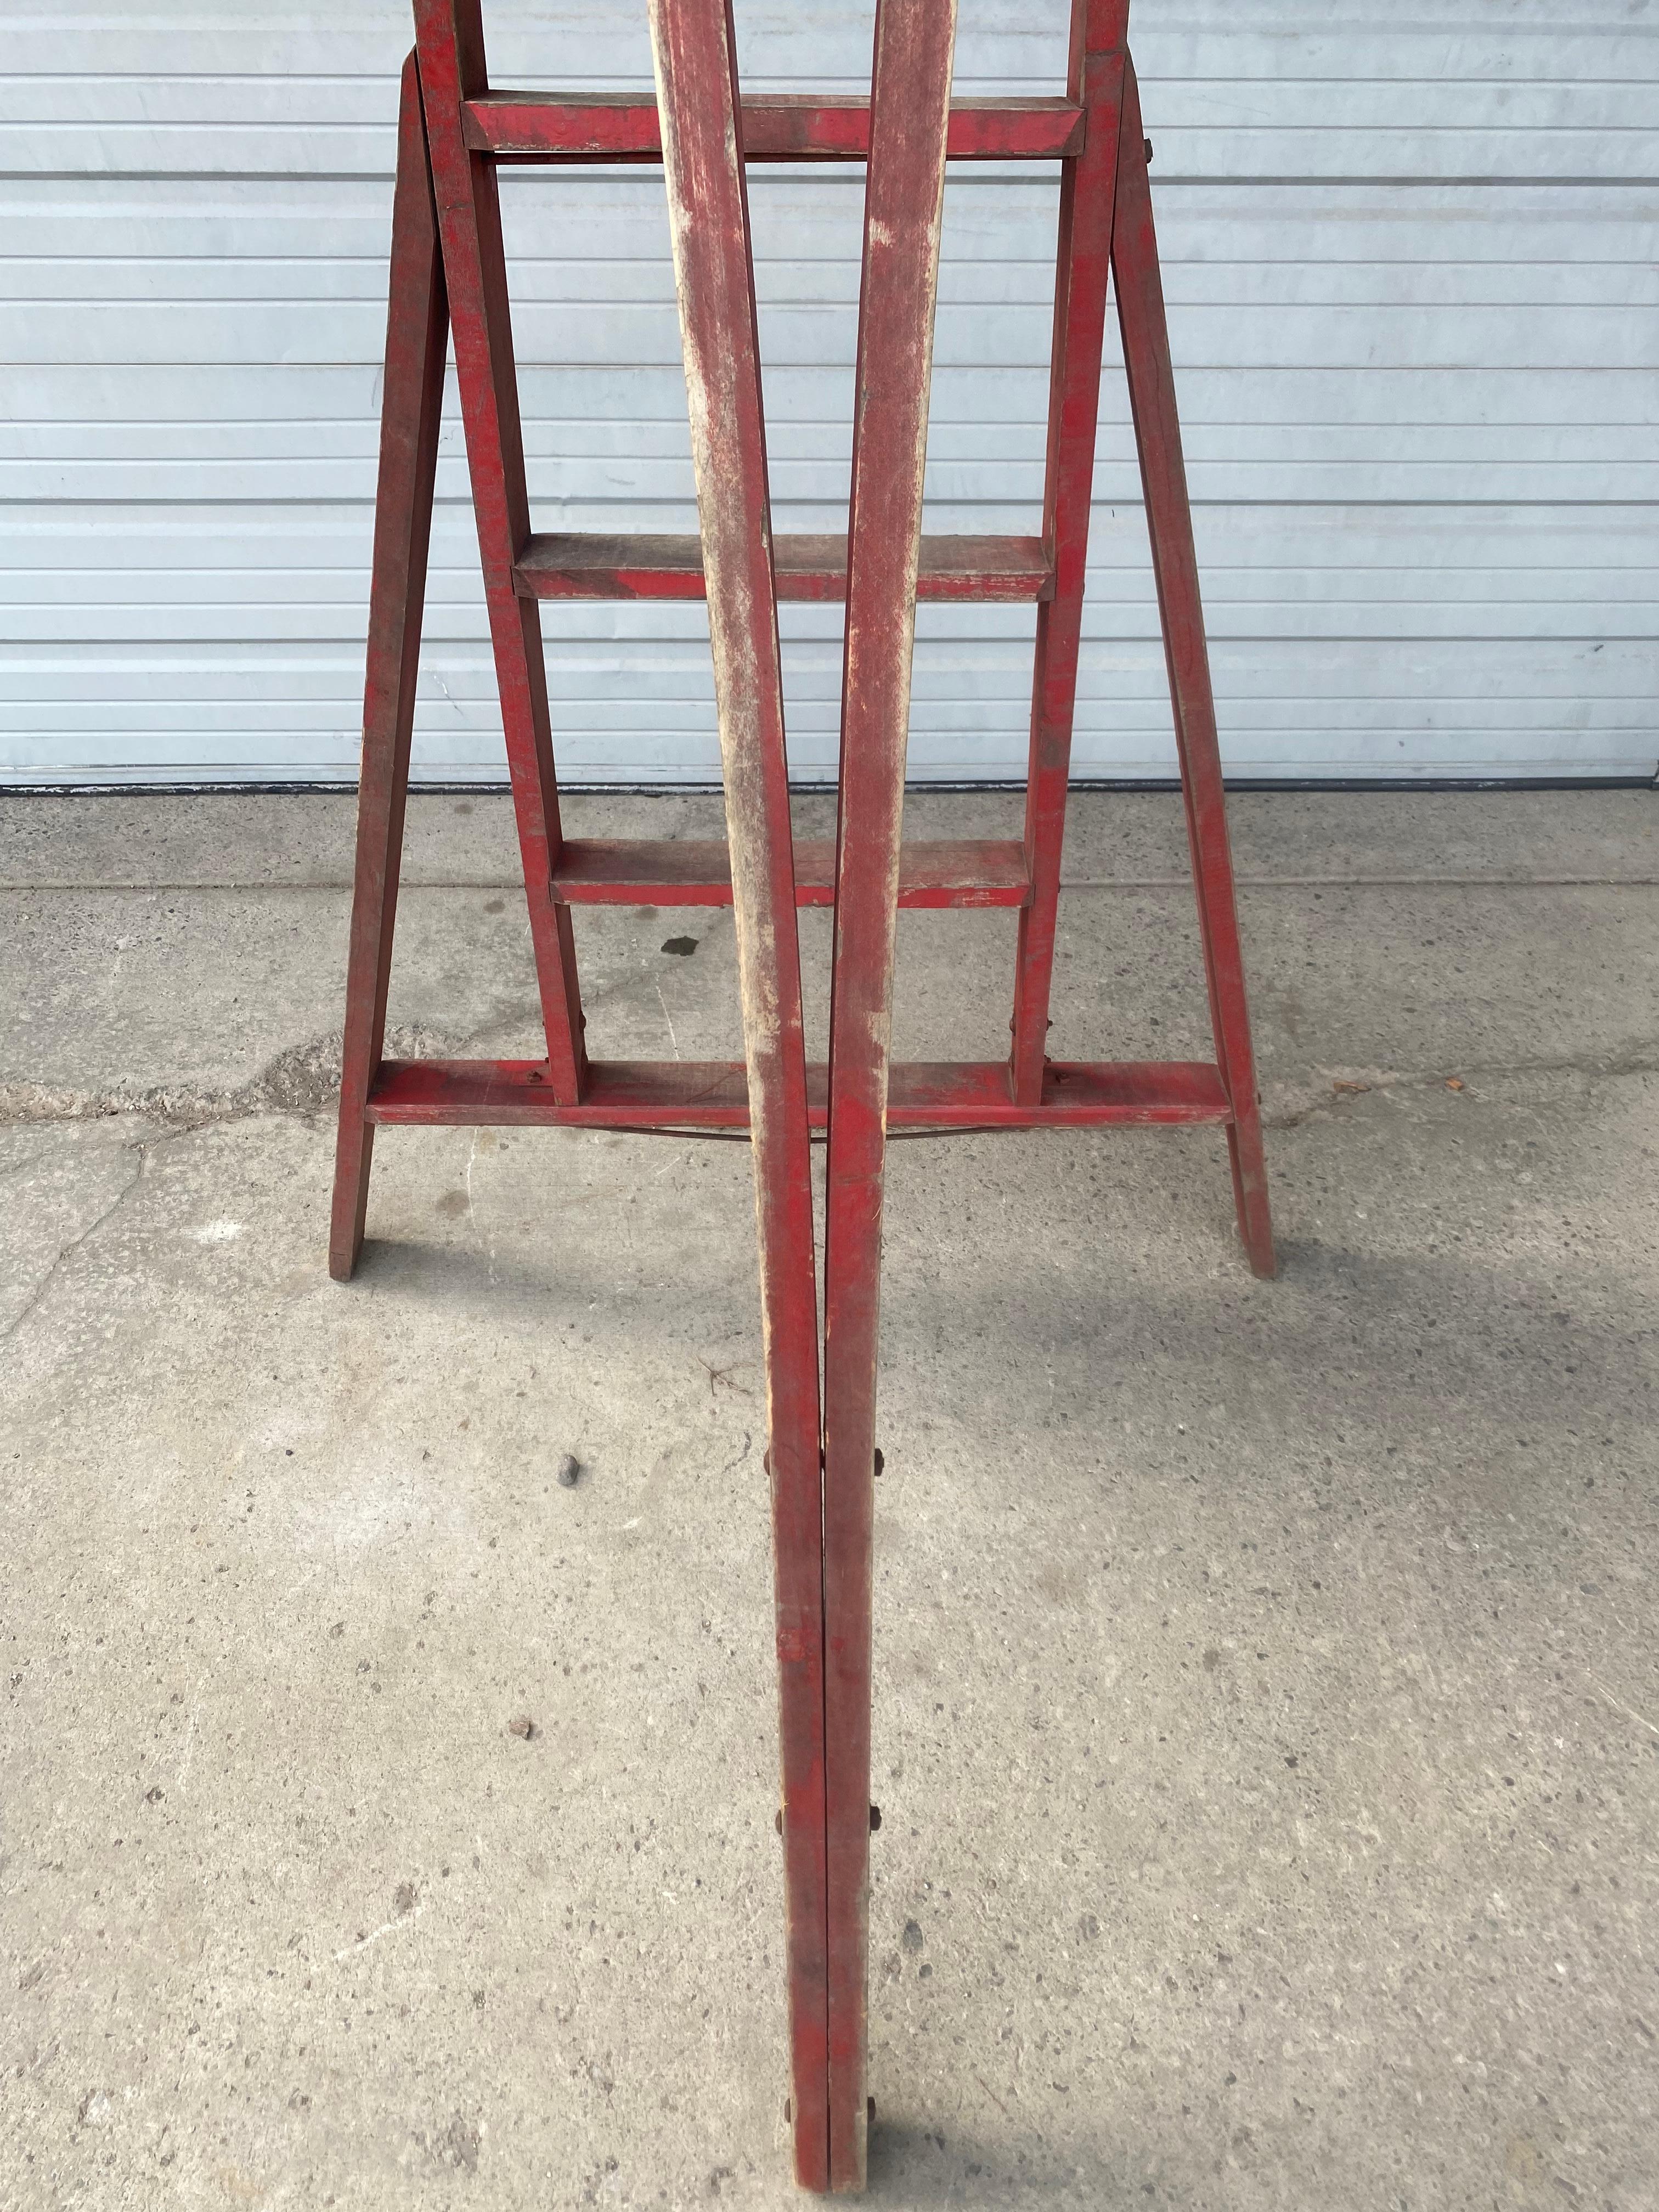 orchard ladder for sale